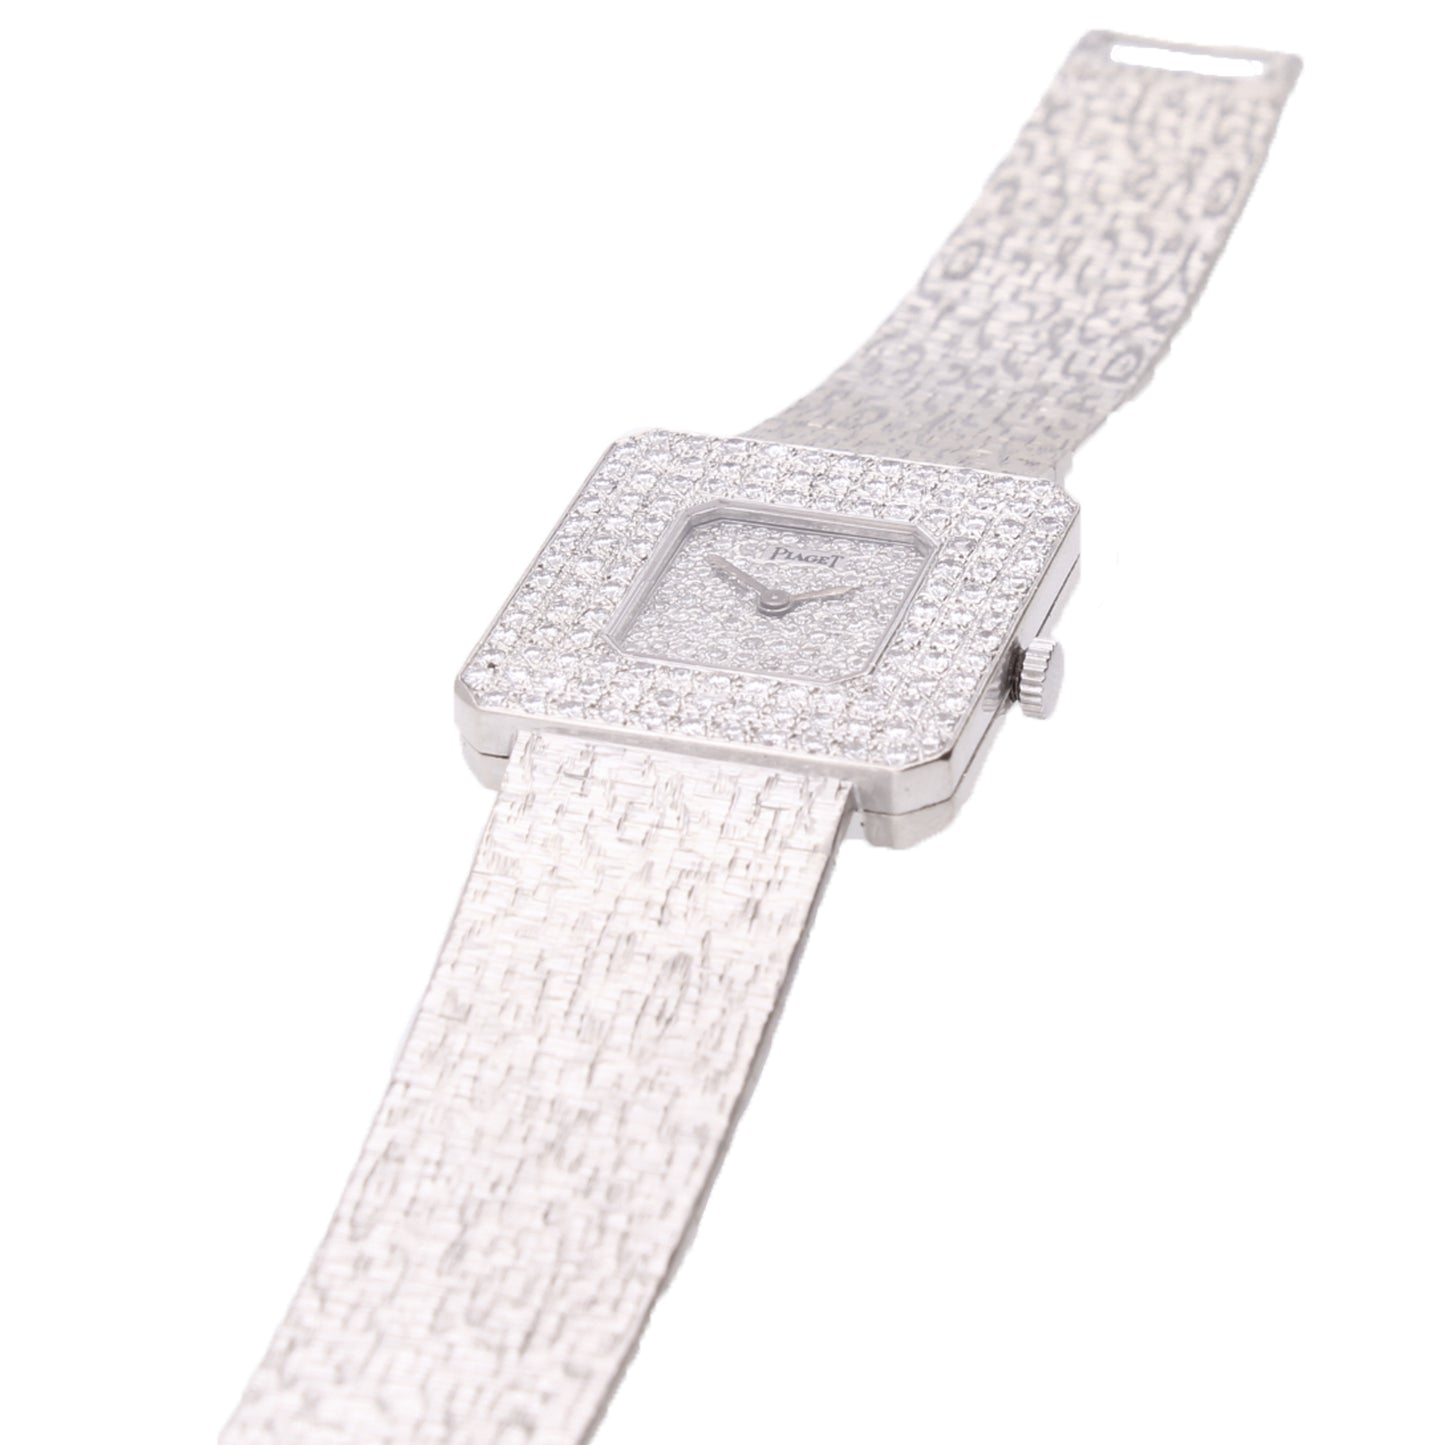 18ct white gold Protocole diamond set bracelet watch. Made 1970